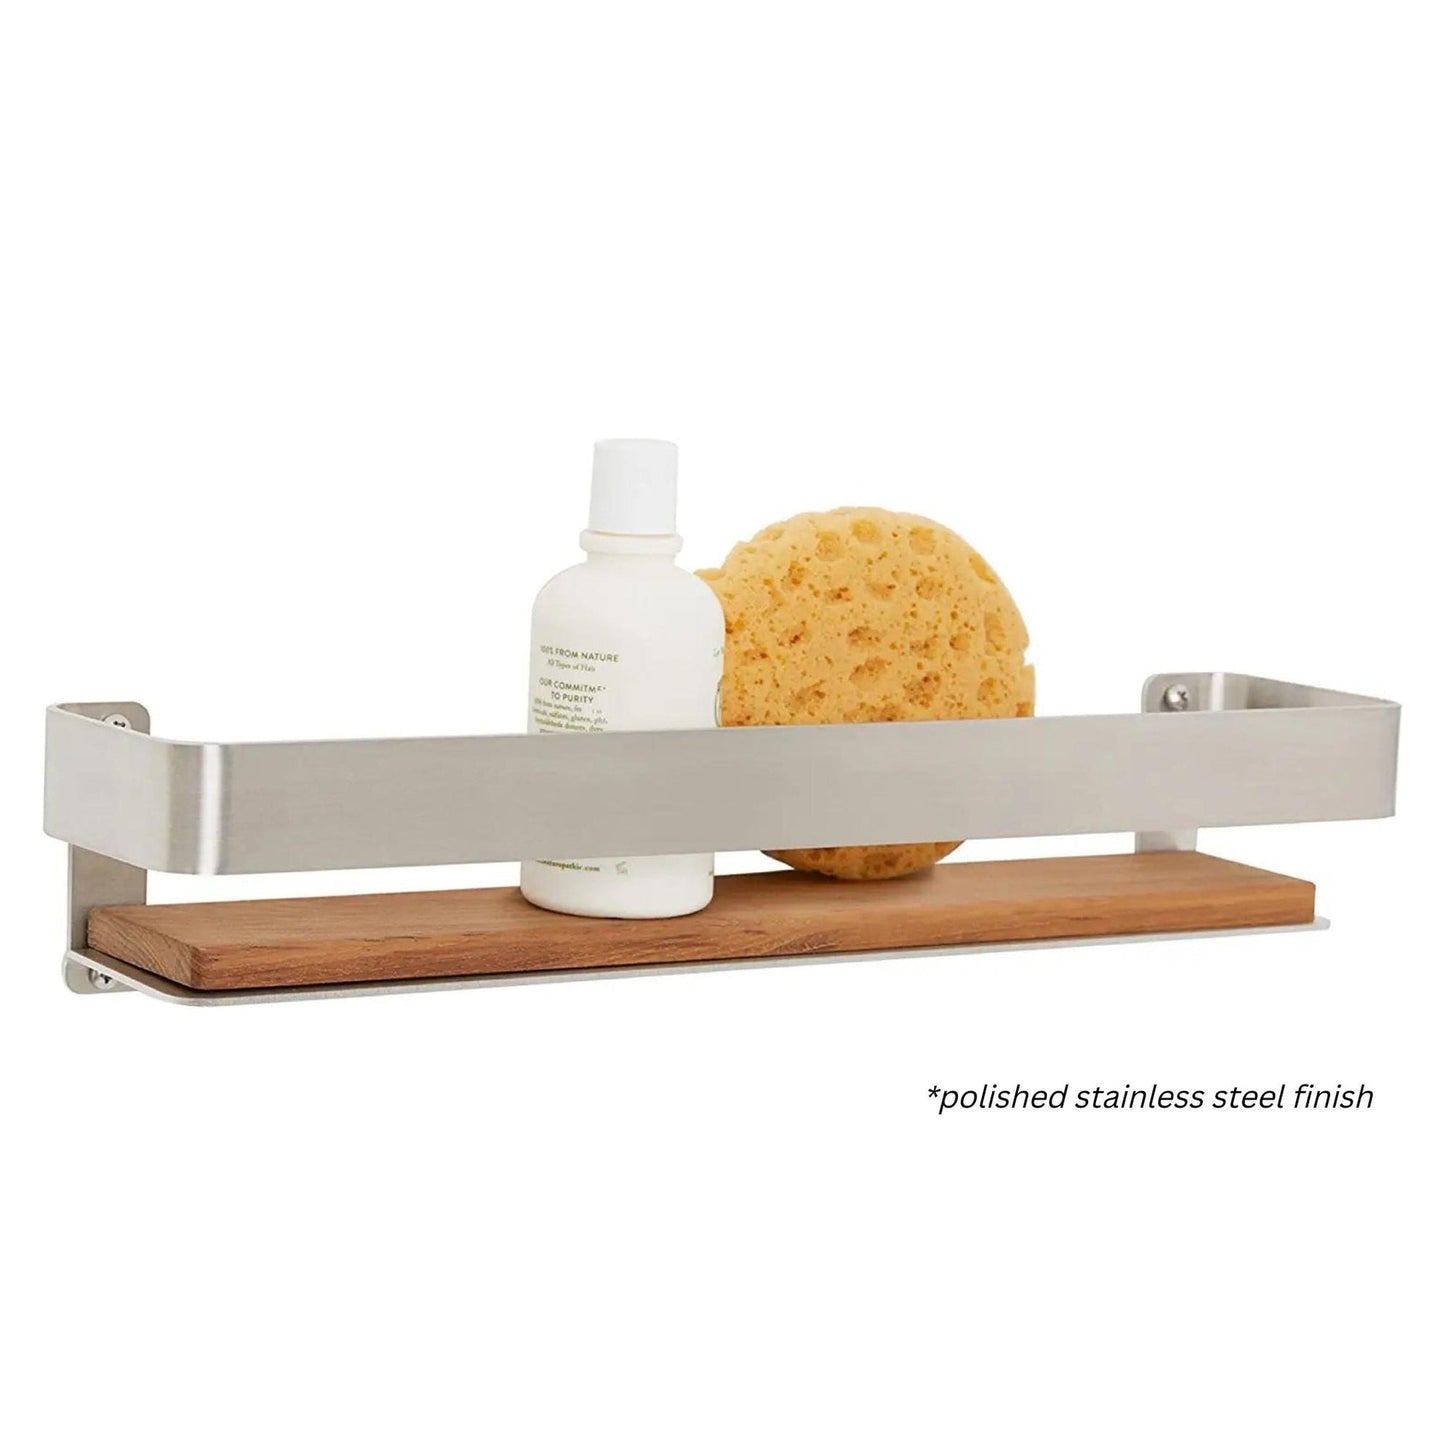 Seachrome Coronado 700 Series 18" x 4" Rectangular Shower Shelf With Rail in White Wrinkle Powder Coated Finish Stainless Steel and Natural Teak Wood Insert